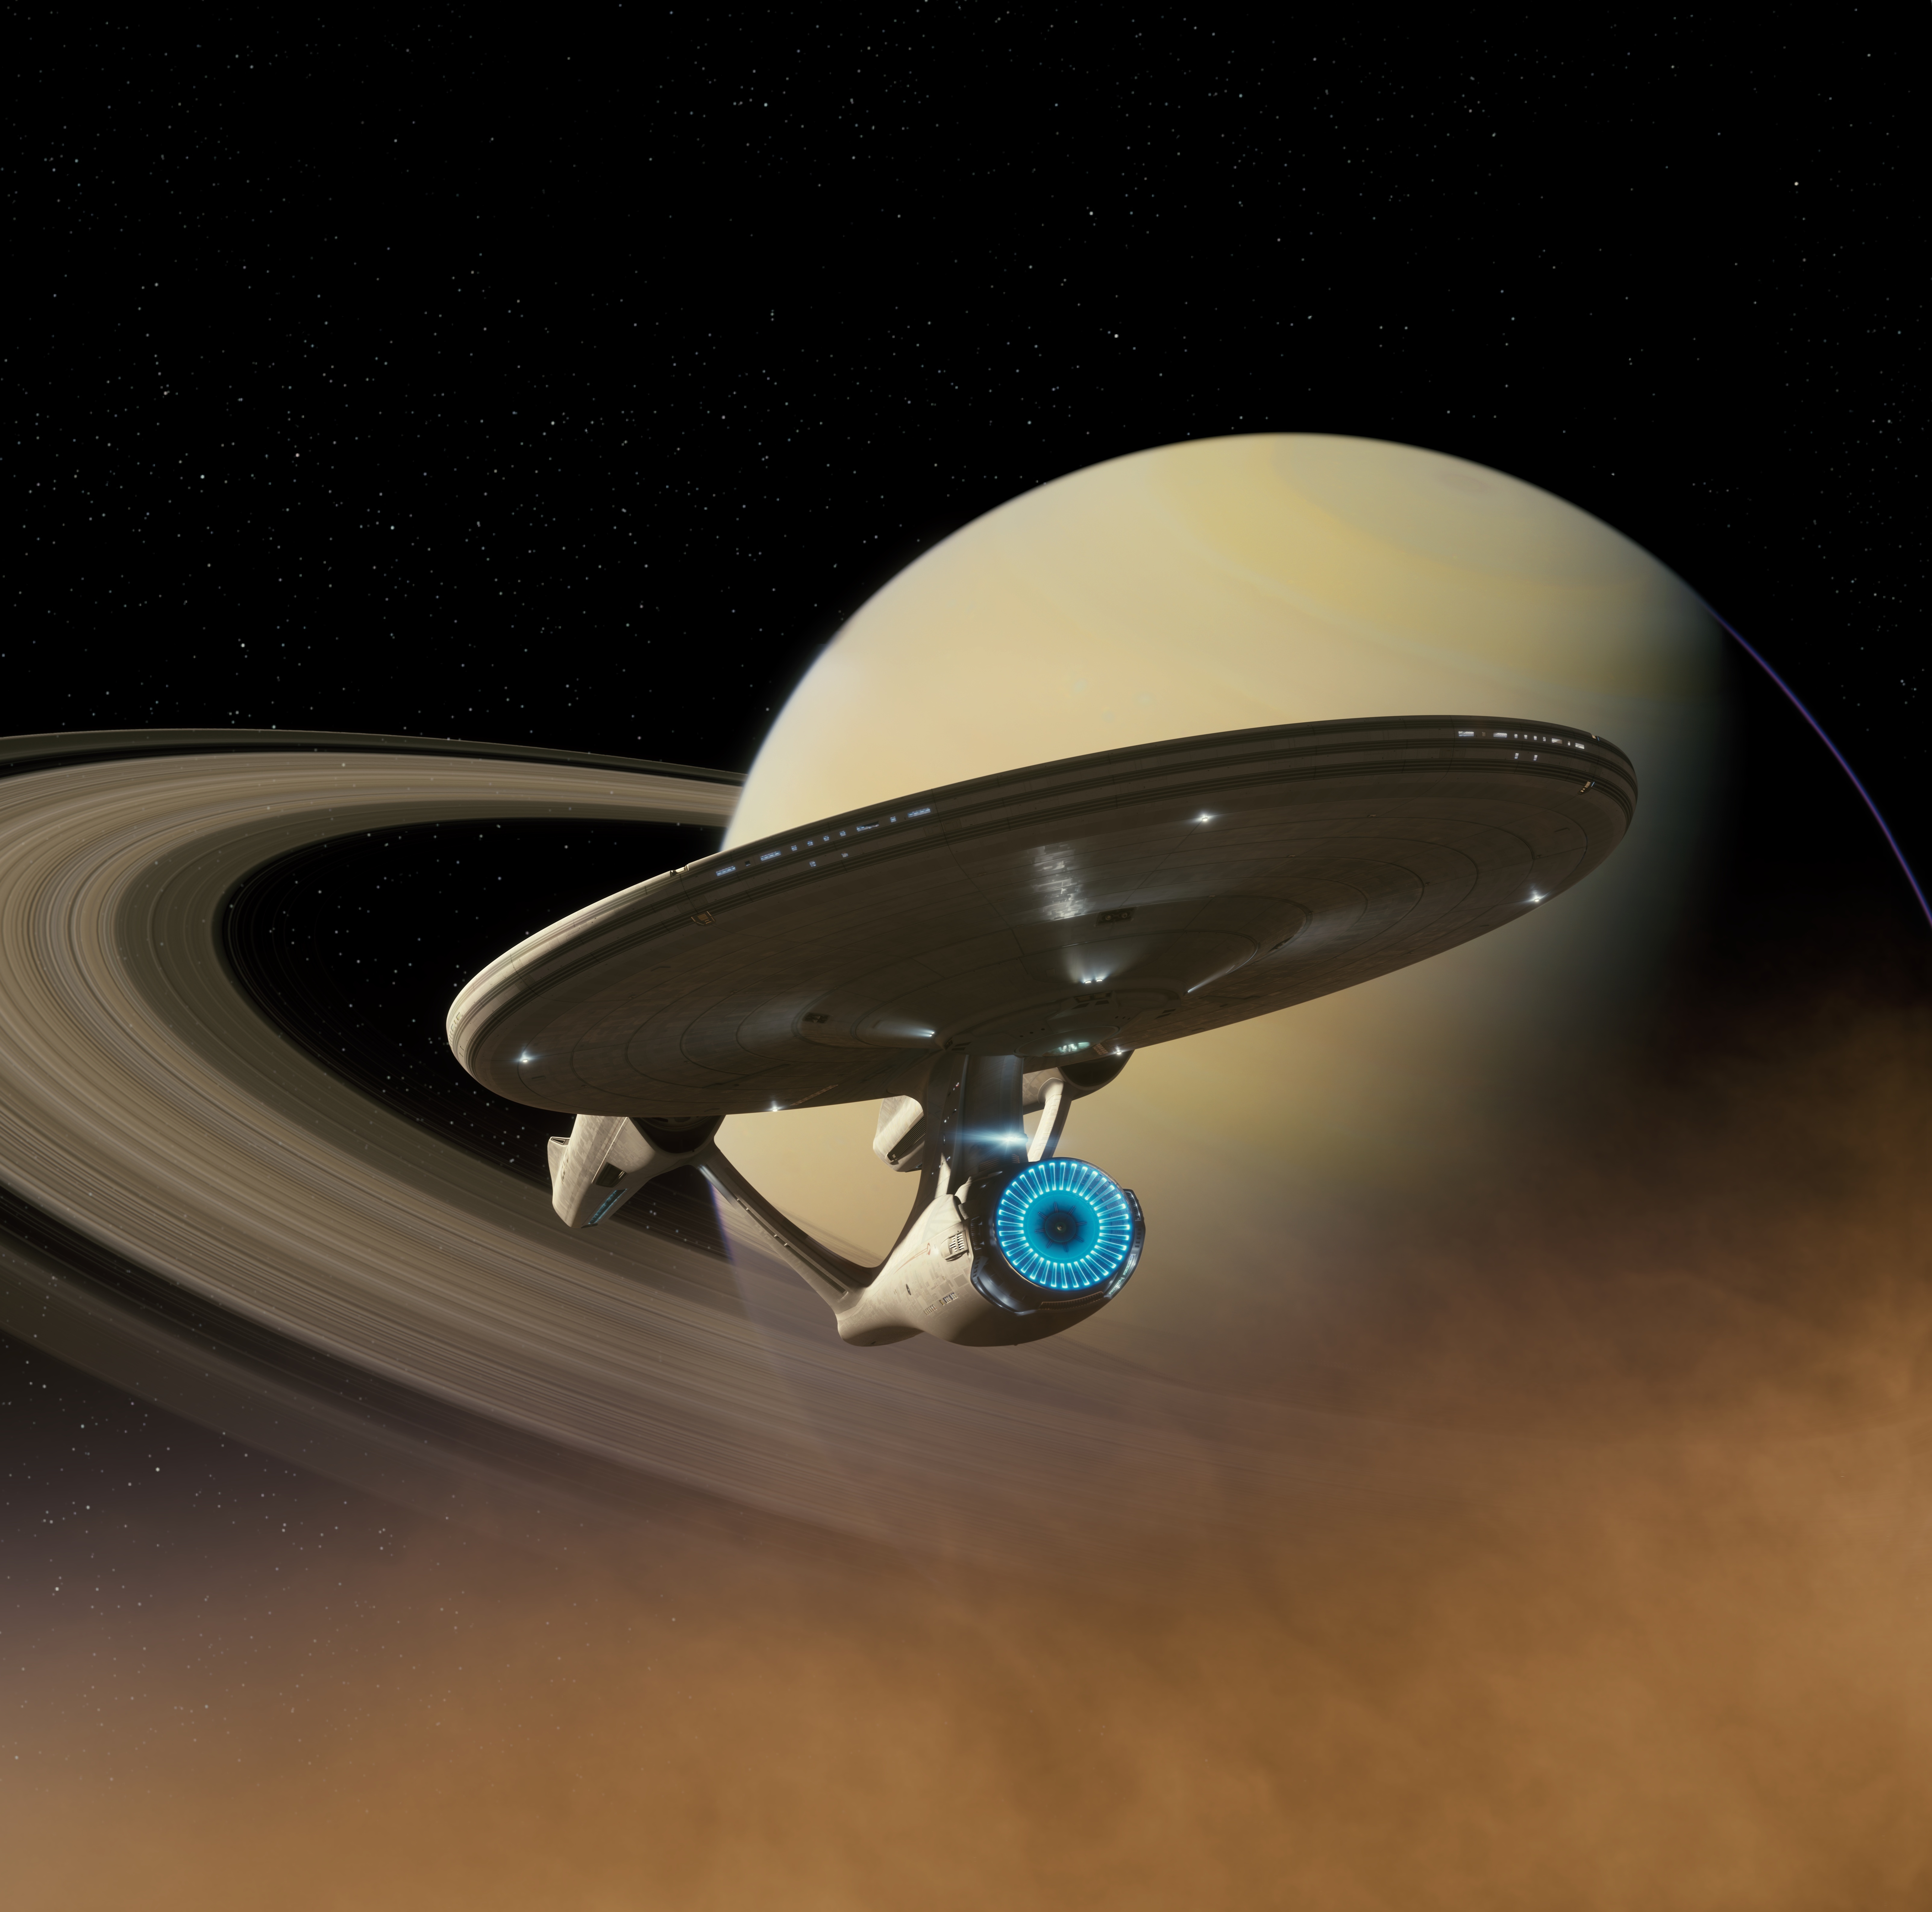 Star Trek Spaceship Science Fiction USS Enterprise Spaceship Star Trek Ships Digital Art Planet Plan 6412x6347